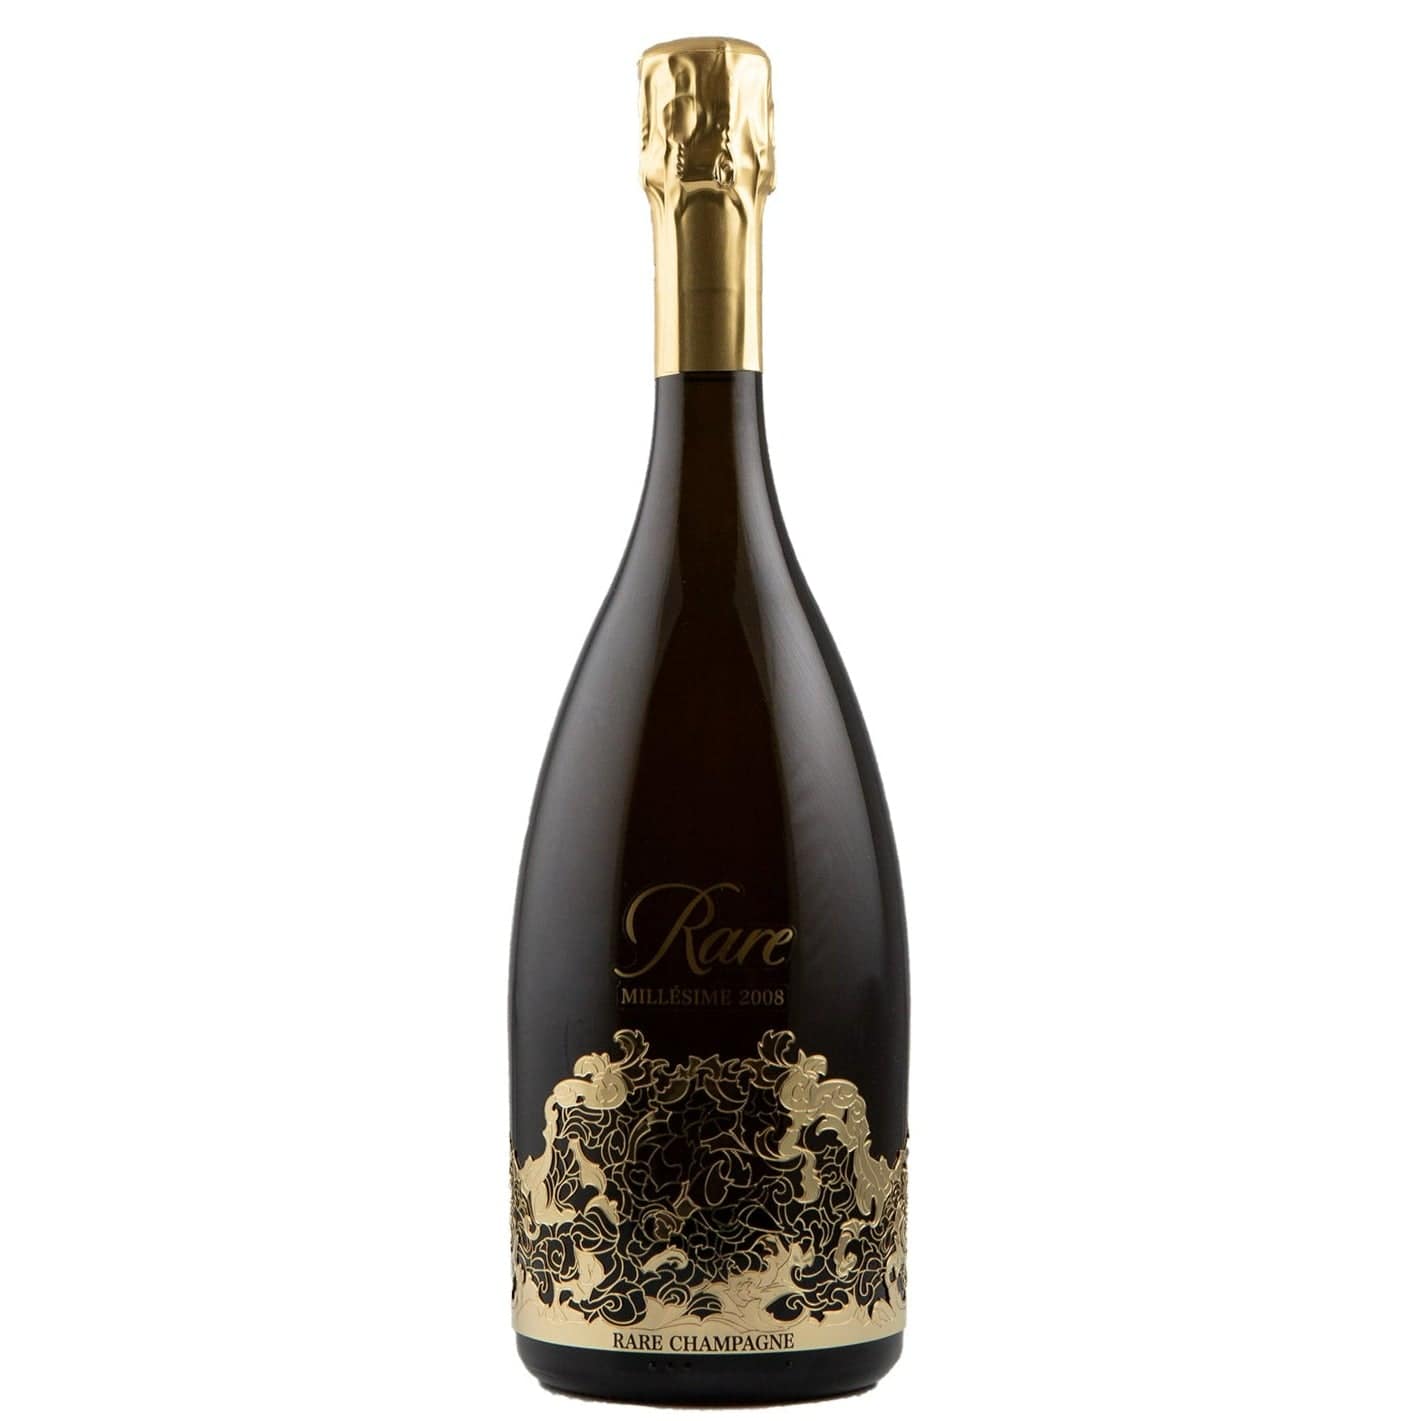 Single bottle of Sparkling wine Piper-Hiedsieck, Rare Brut Millesime, Champagne, 2008 70% Chardonnay & 30% Pinot Noir